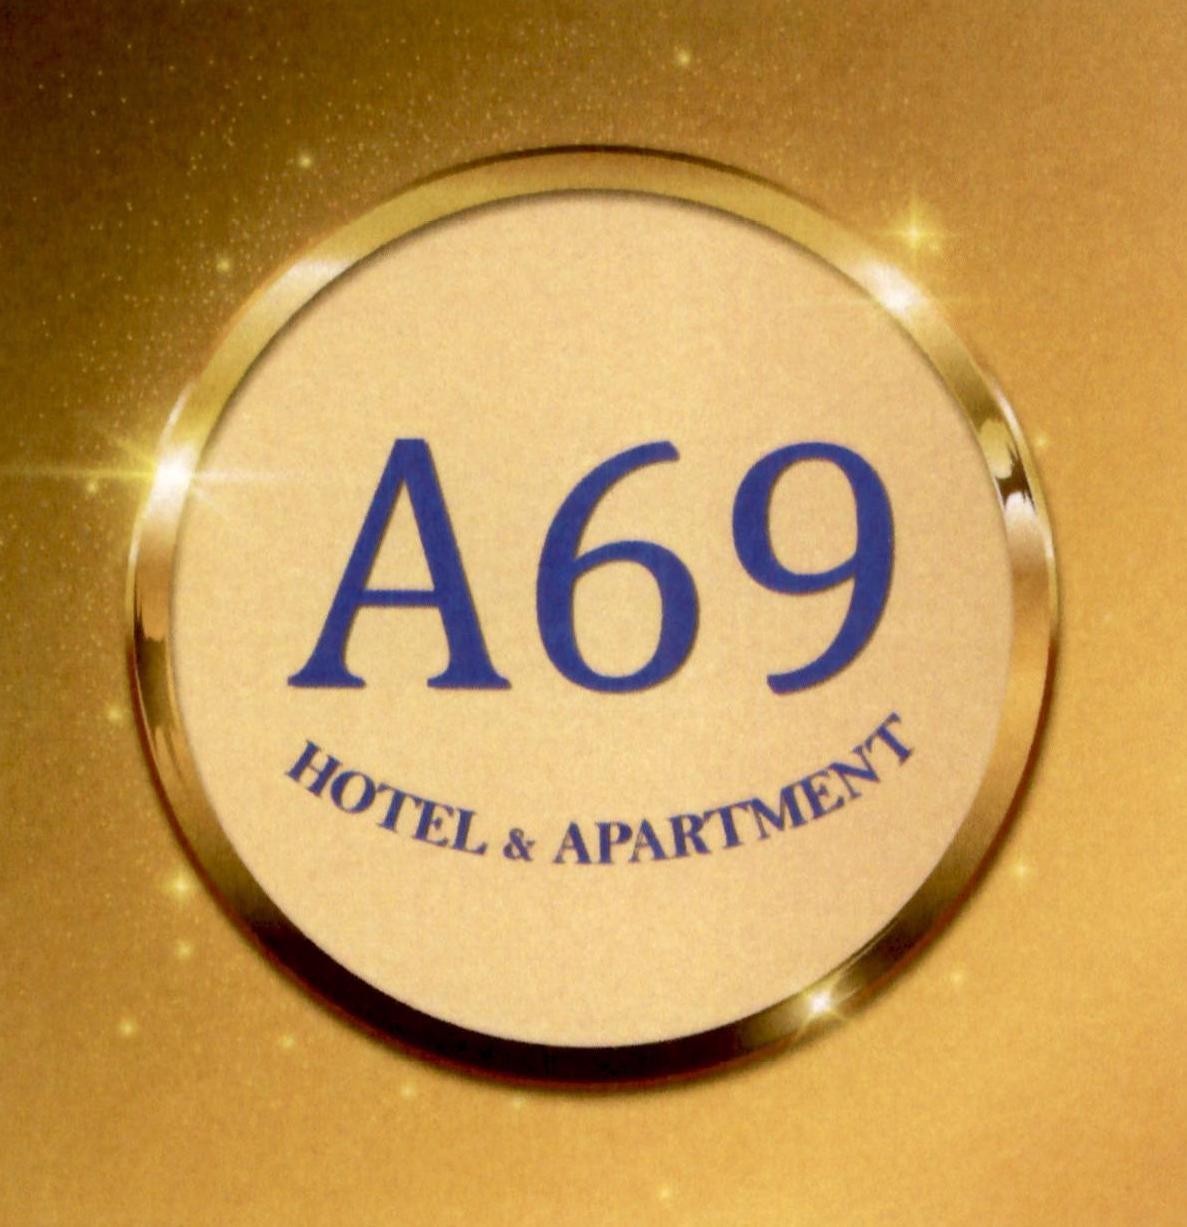 A69 HOTEL & APARTMENT